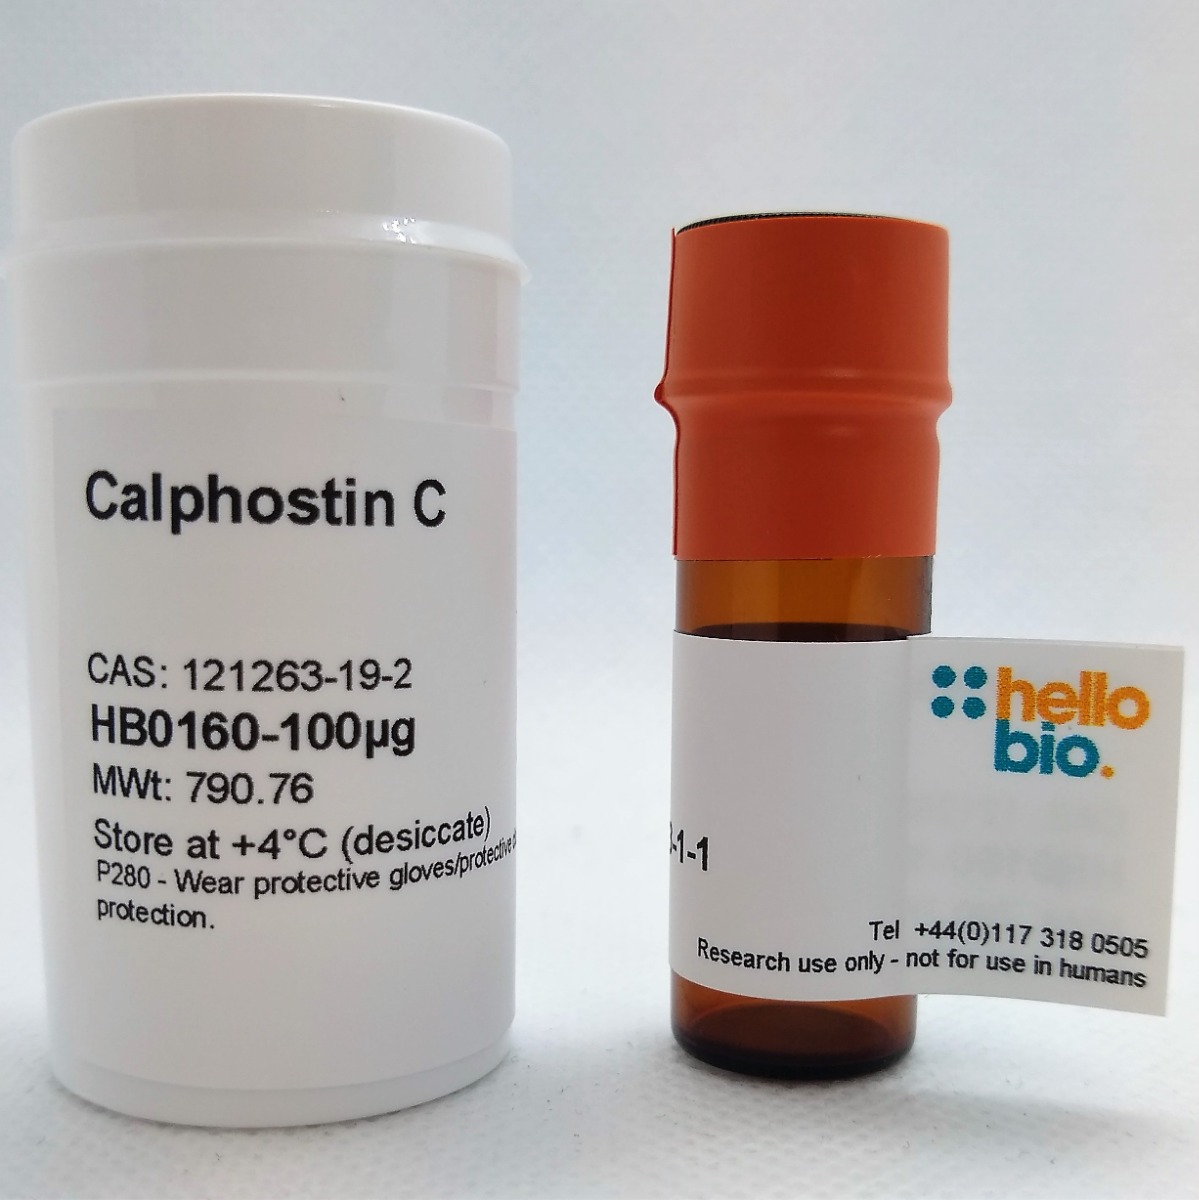 Calphostin C product vial image | Hello Bio